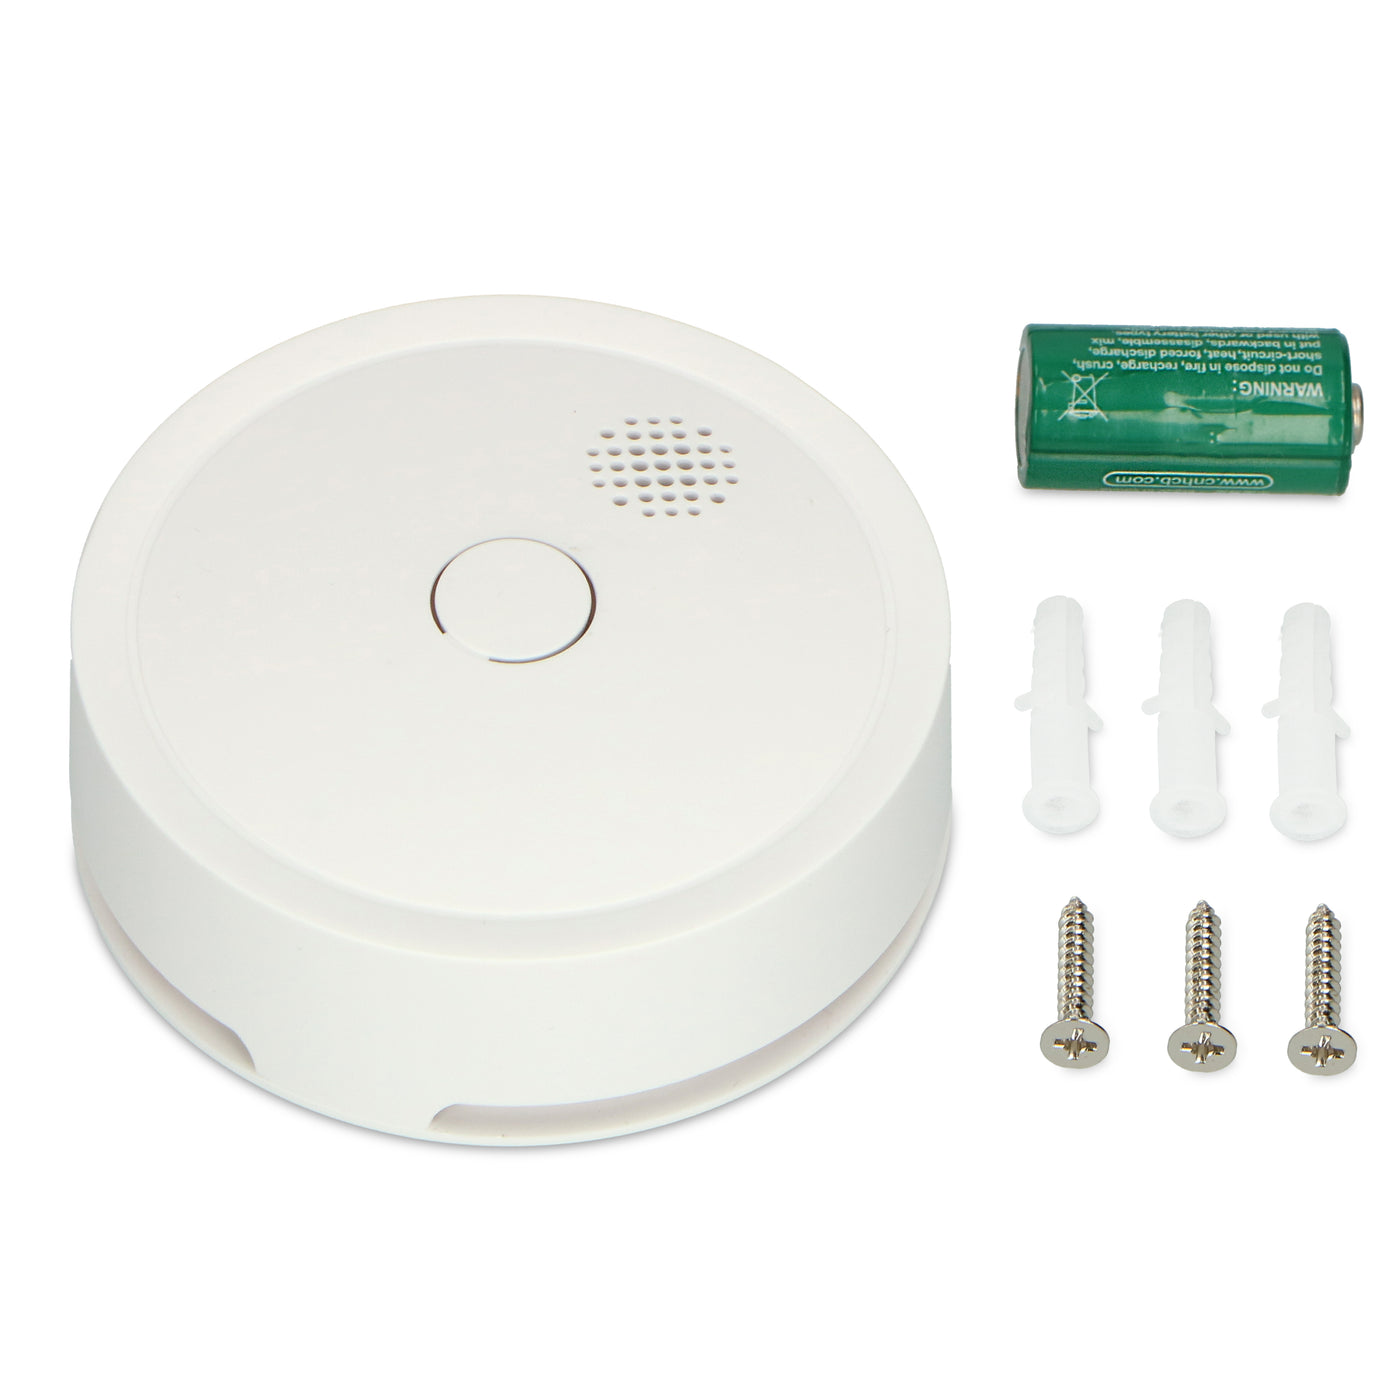 Alecto SA61 - Wireless connectable smoke detector 10 year